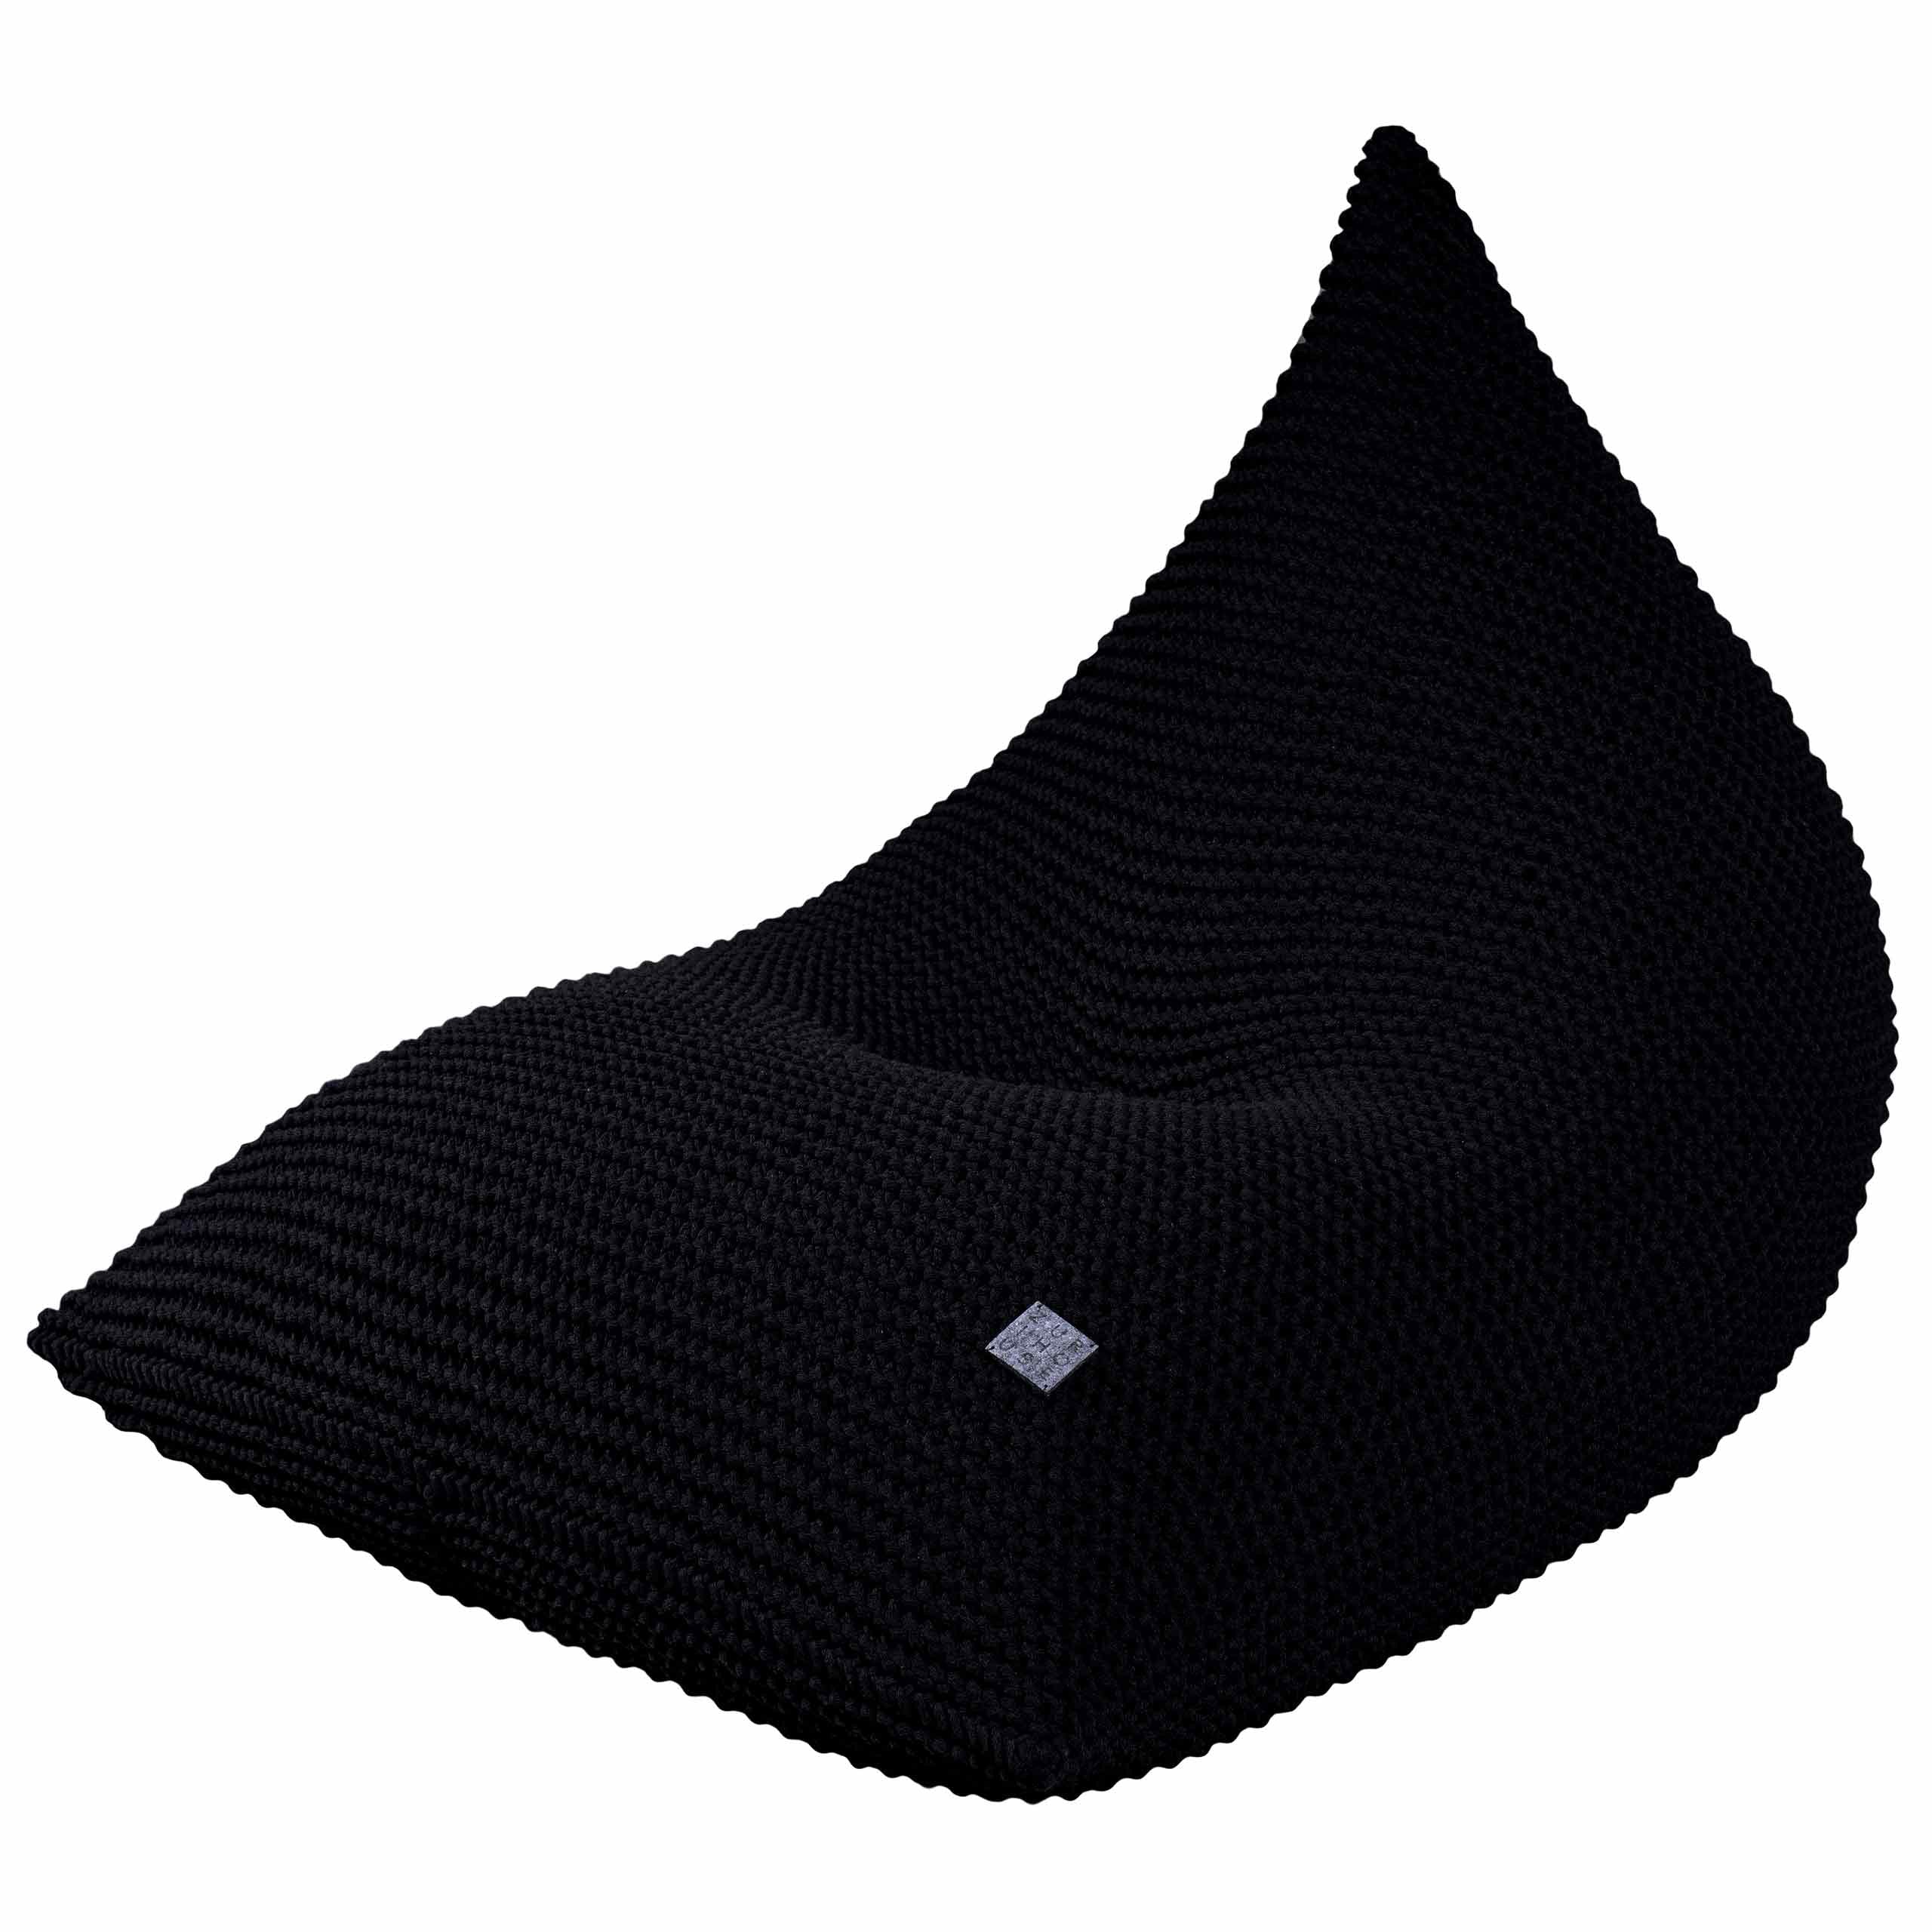 Zuri House Knitted Bean Bag | BLACK - FILLED 80 x 110 x 80cm / 32'' x 44'' x 32''